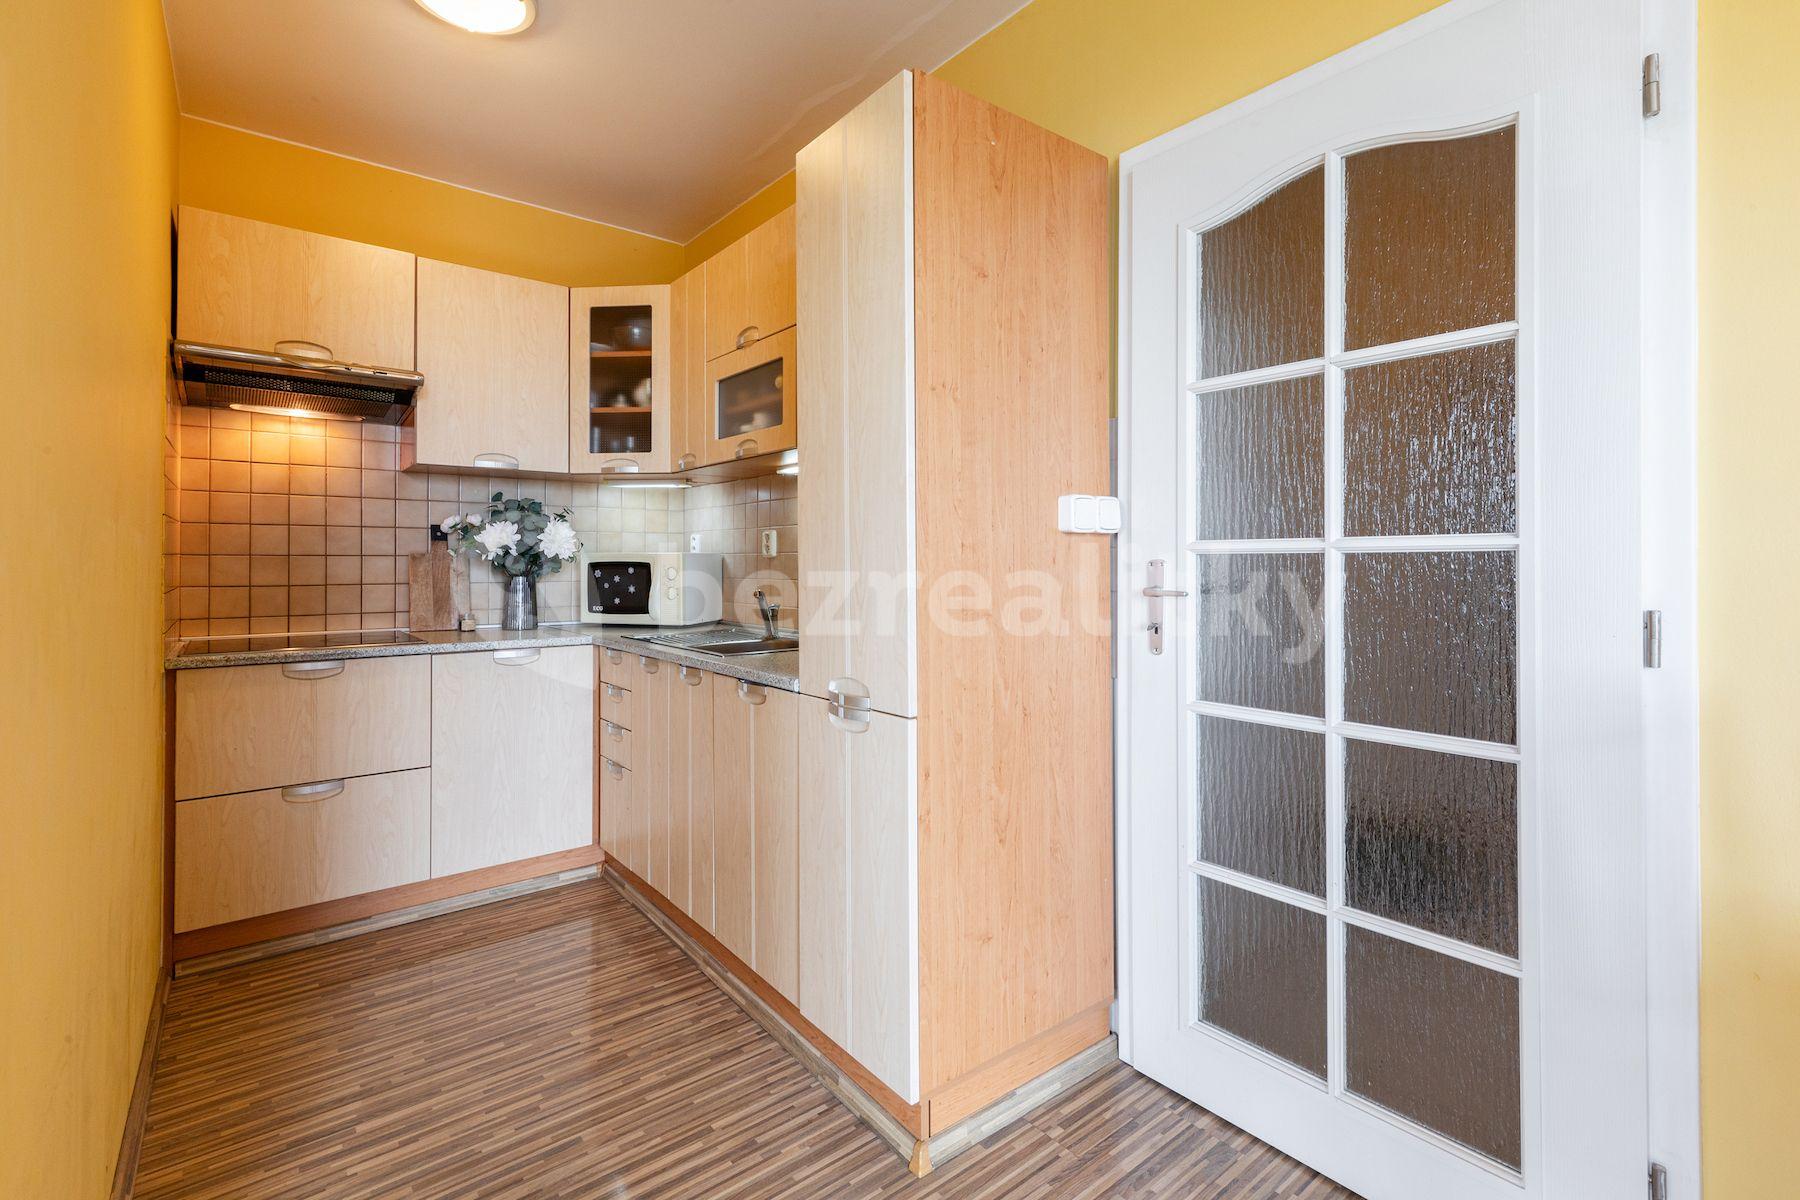 1 bedroom with open-plan kitchen flat for sale, 49 m², Hnězdenská, Prague, Prague